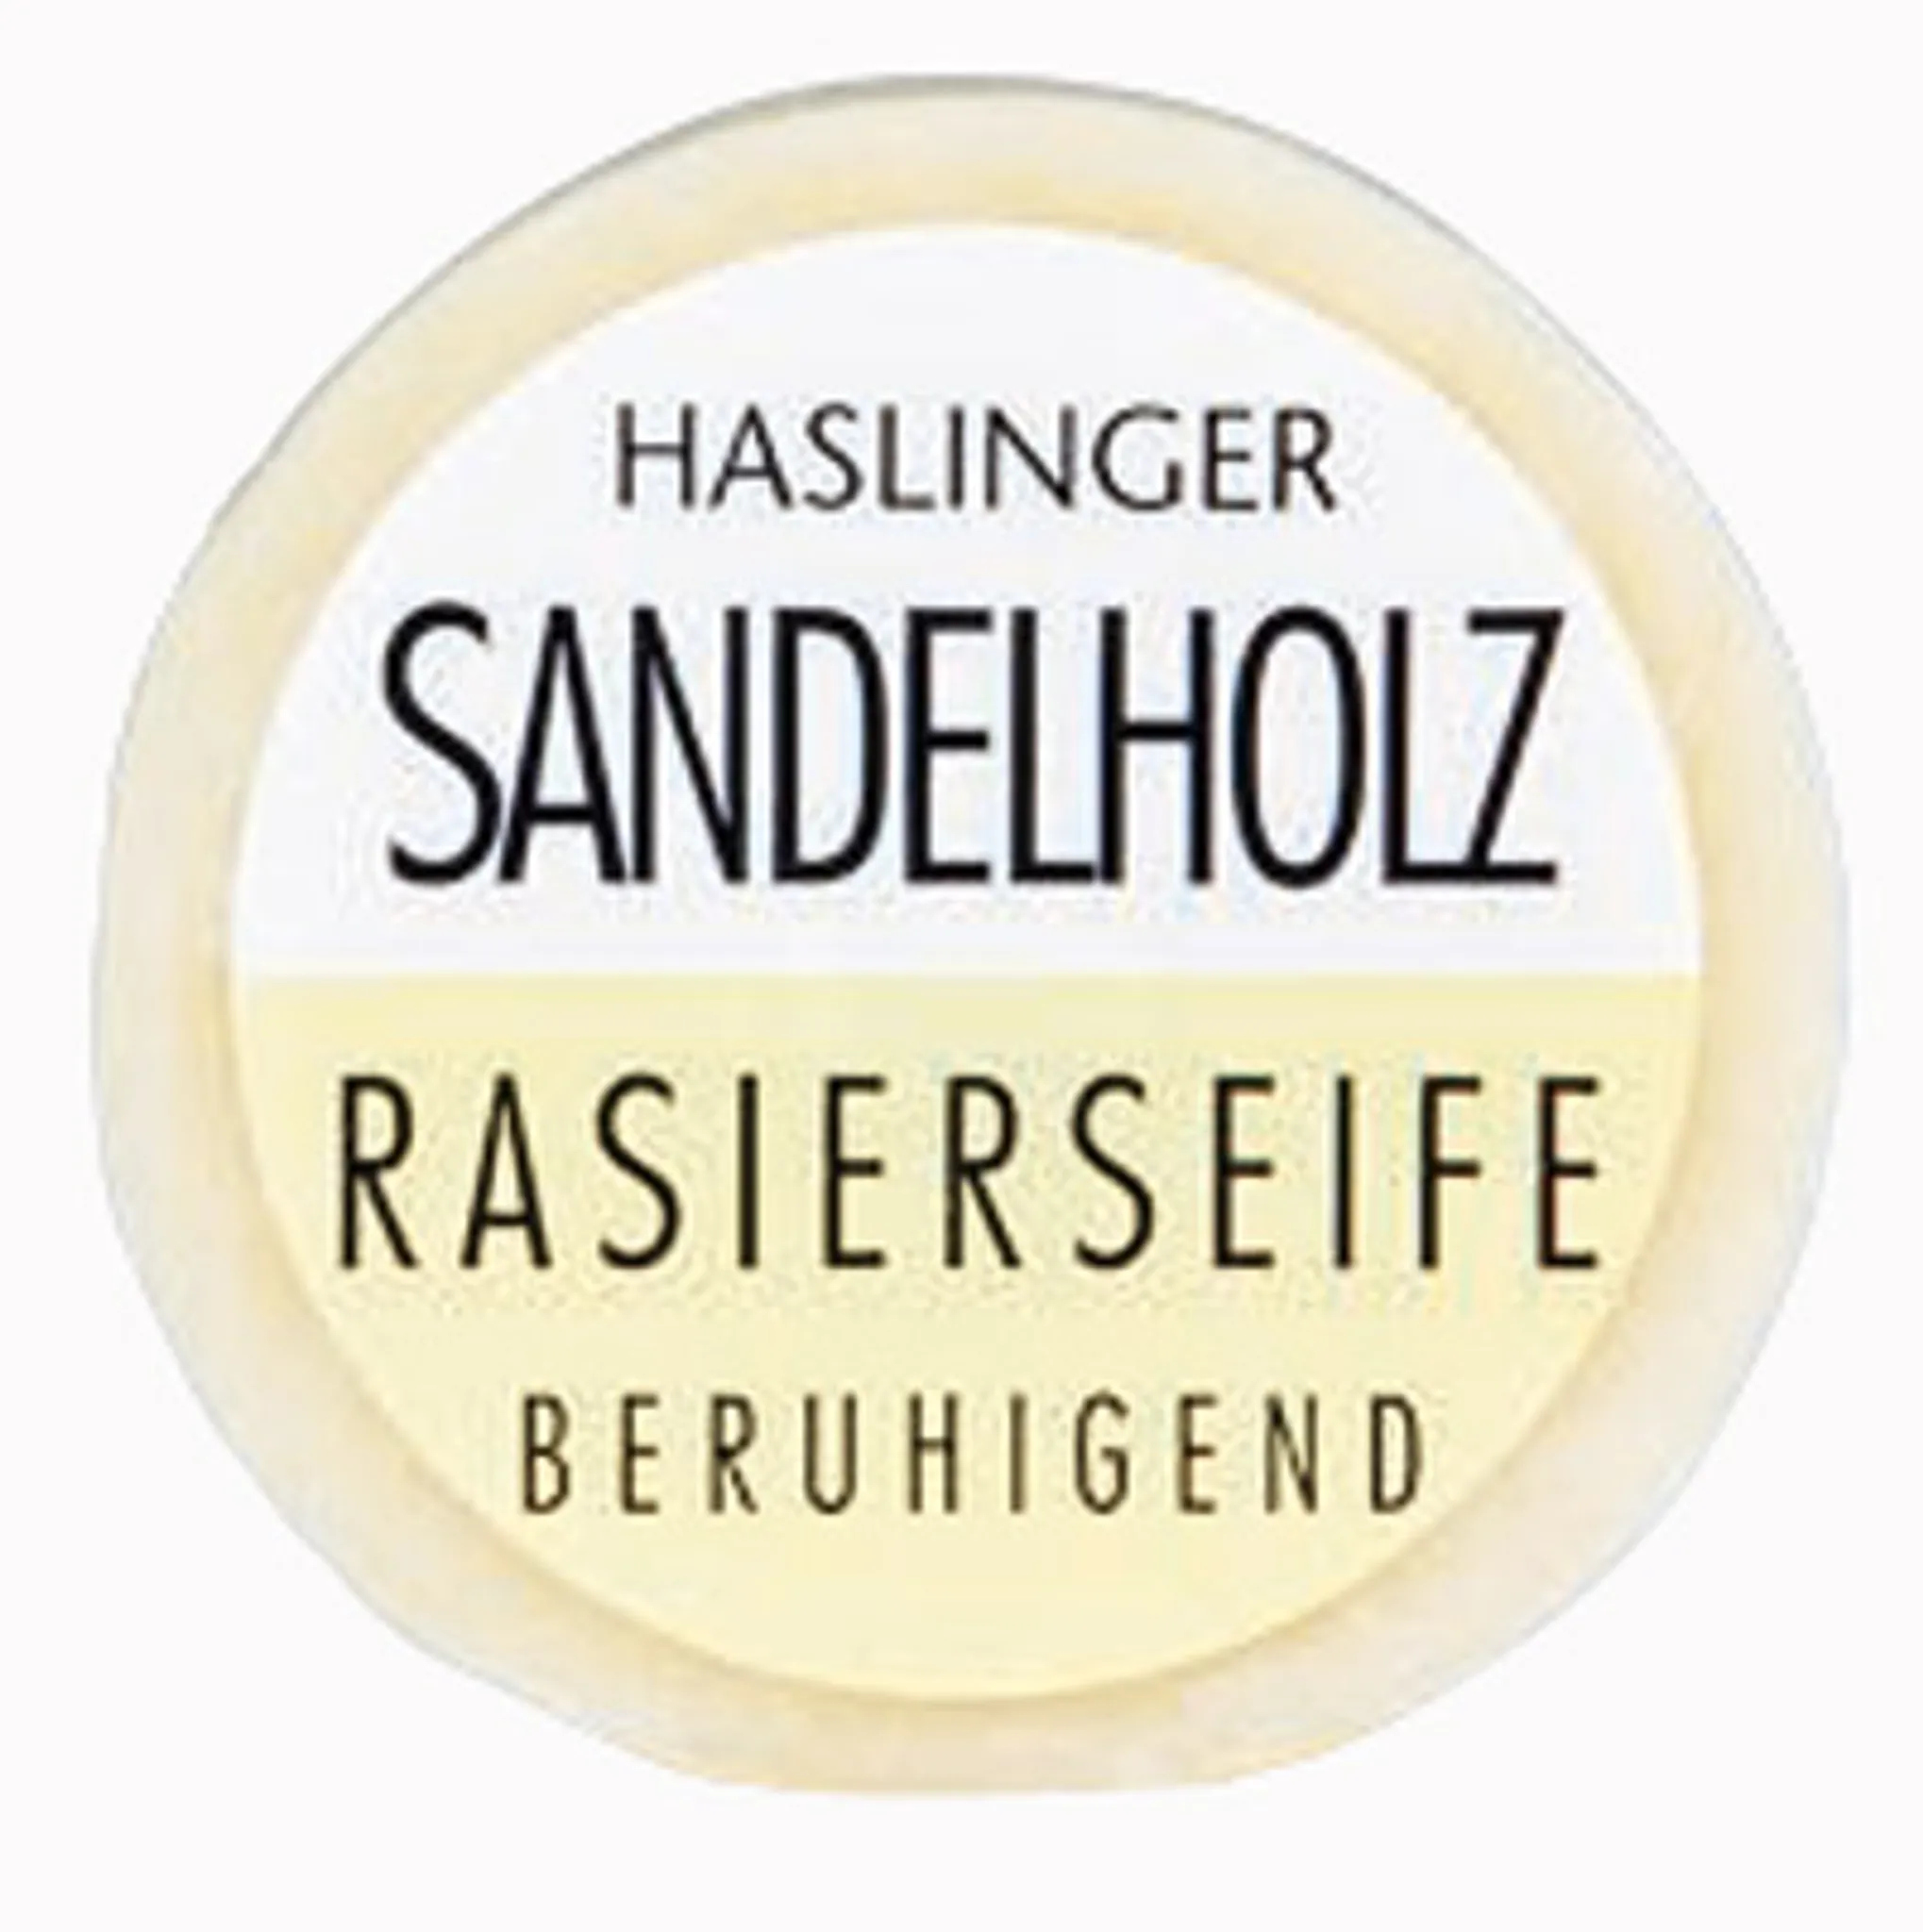 Sandelholz Haslinger Rasierseife beruhigend